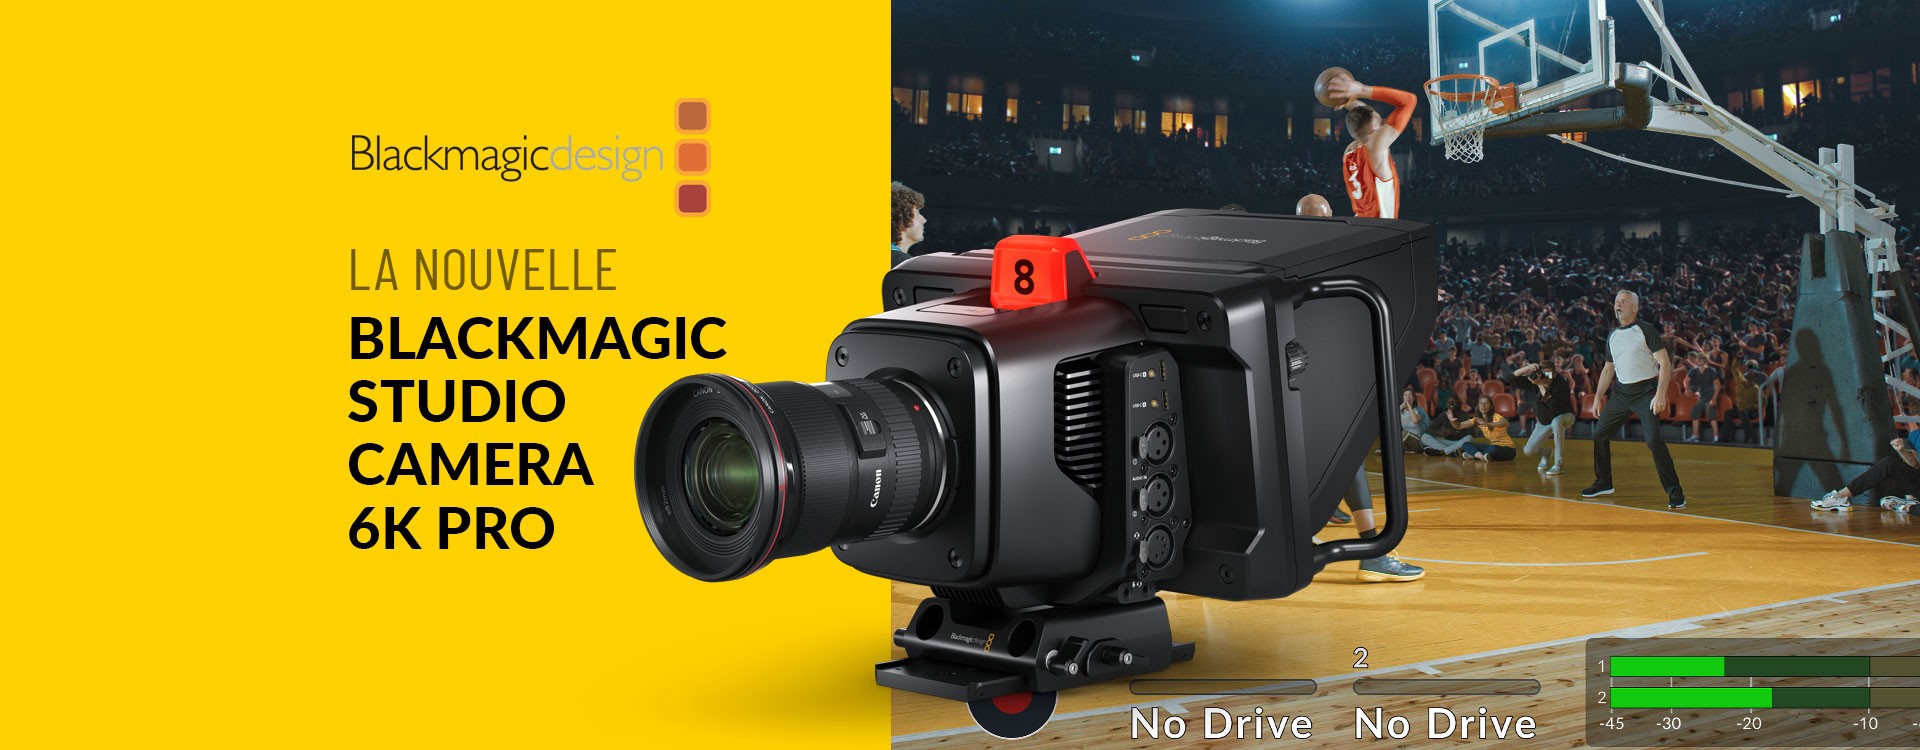 Blackmagic Design annonce la nouvelle Blackmagic Studio Camera 6K Pro